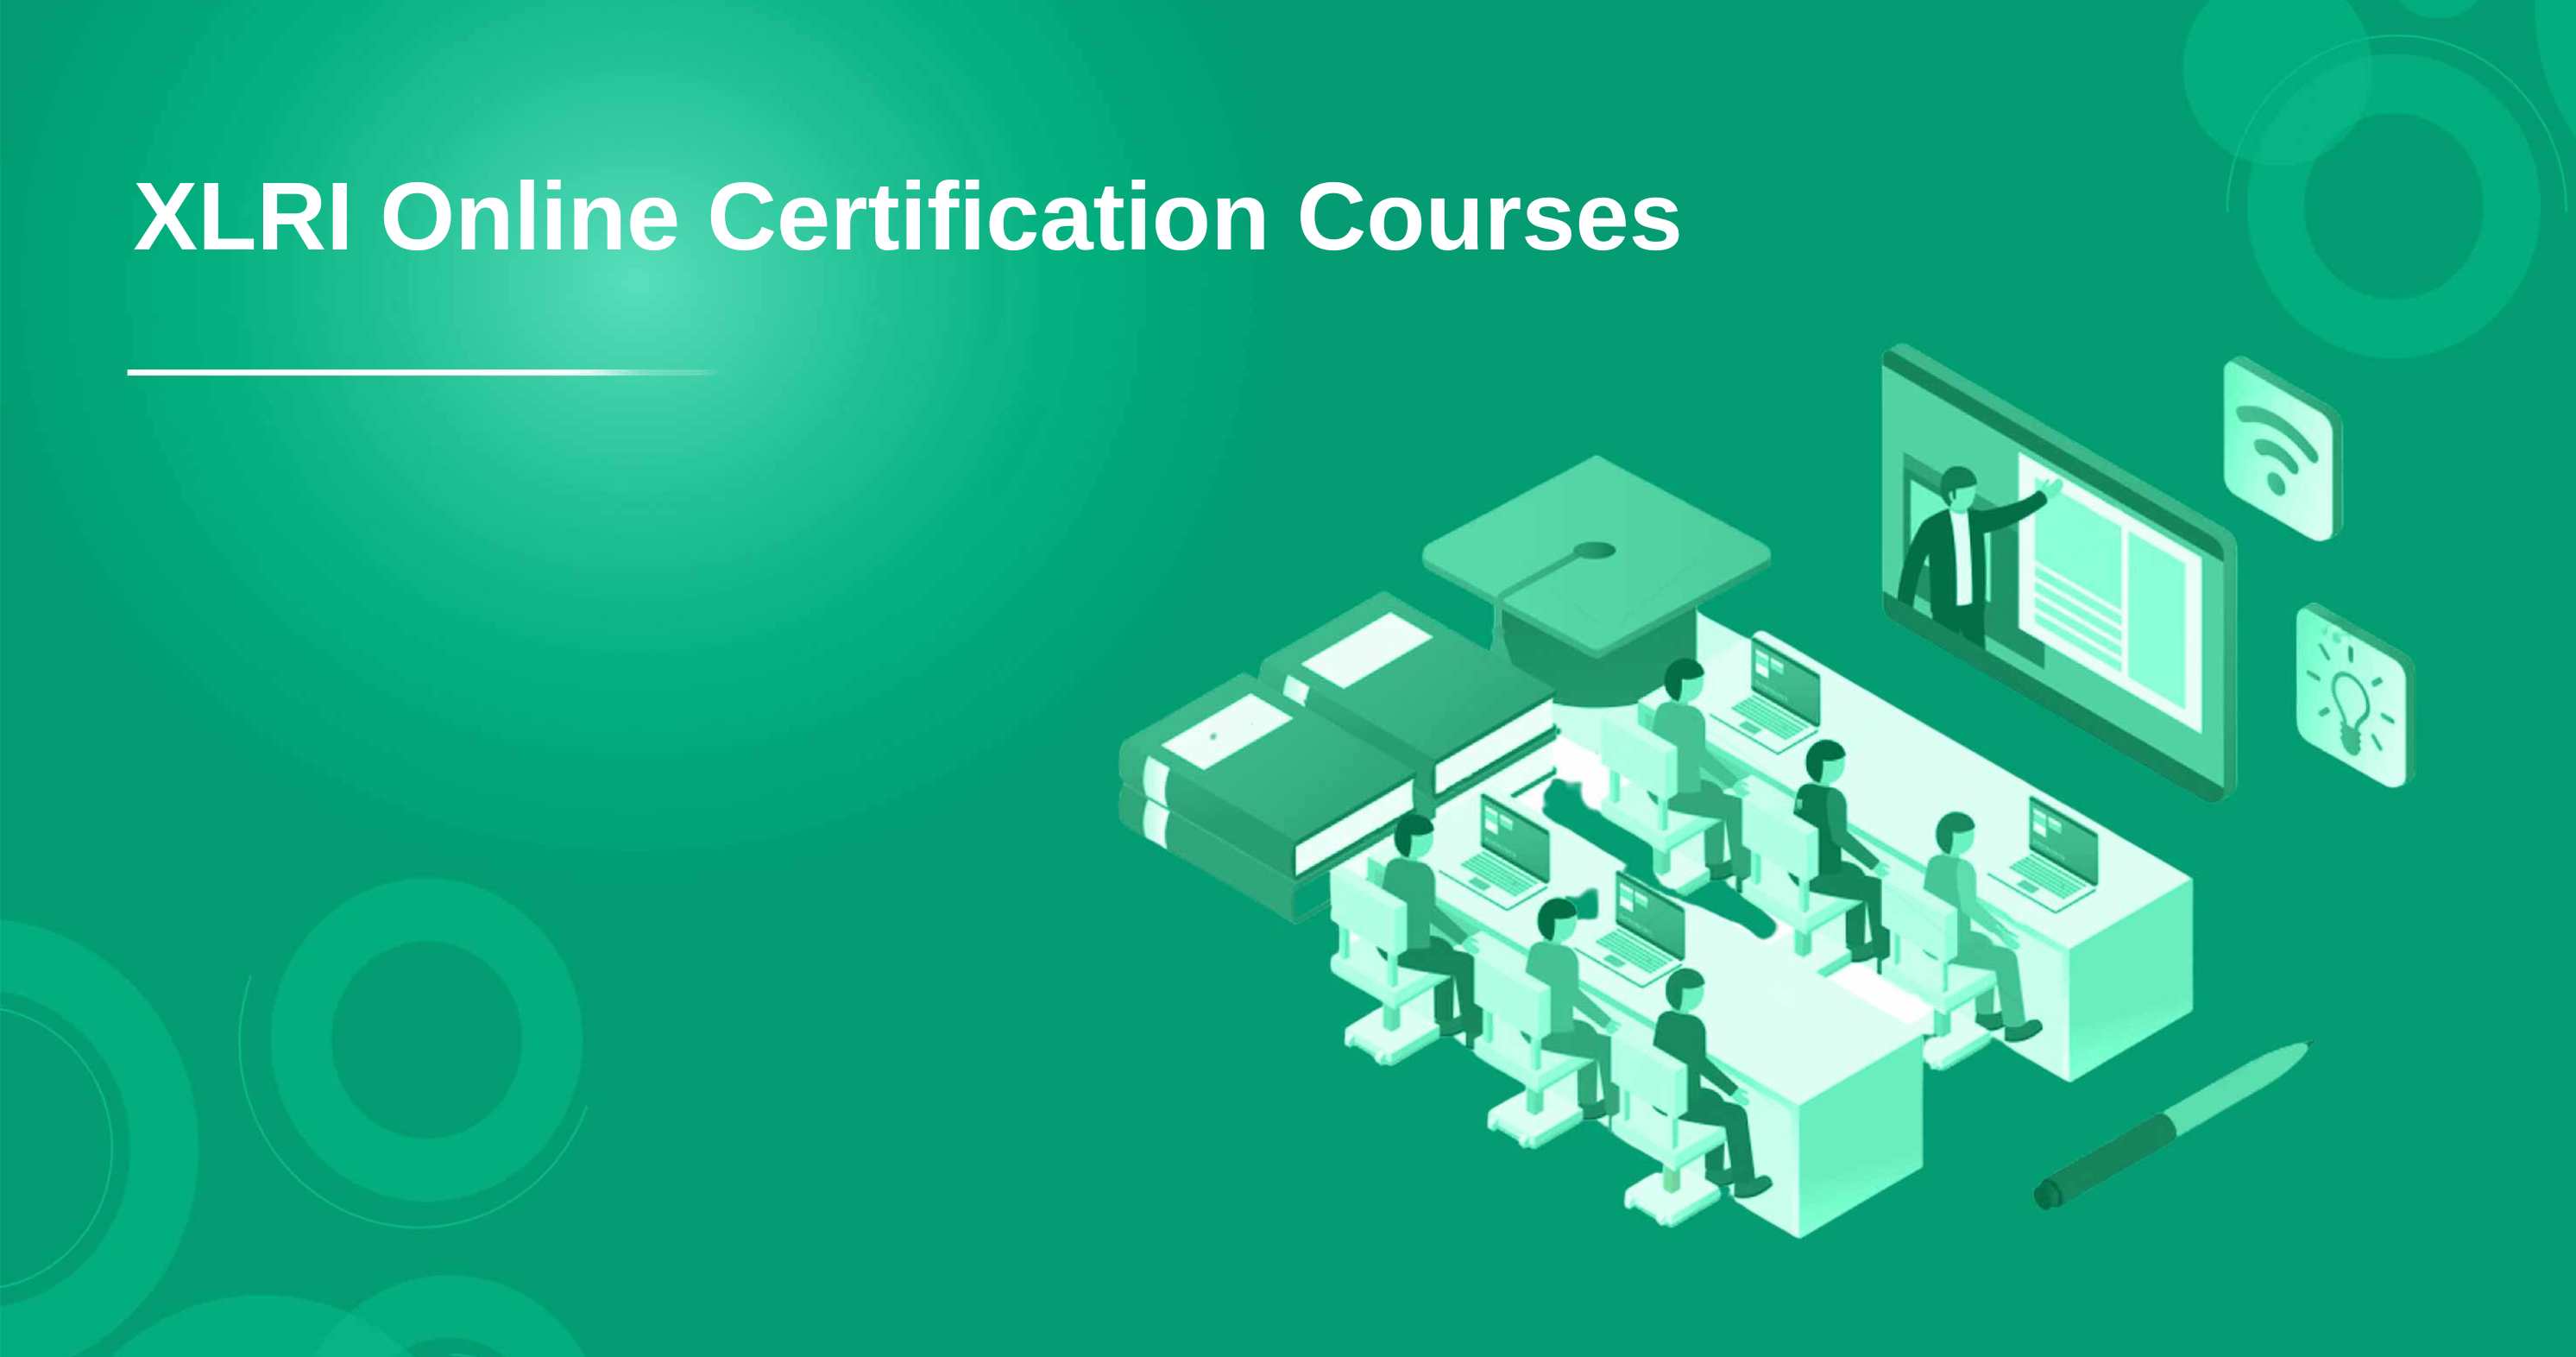 XLRI Online Certification Courses